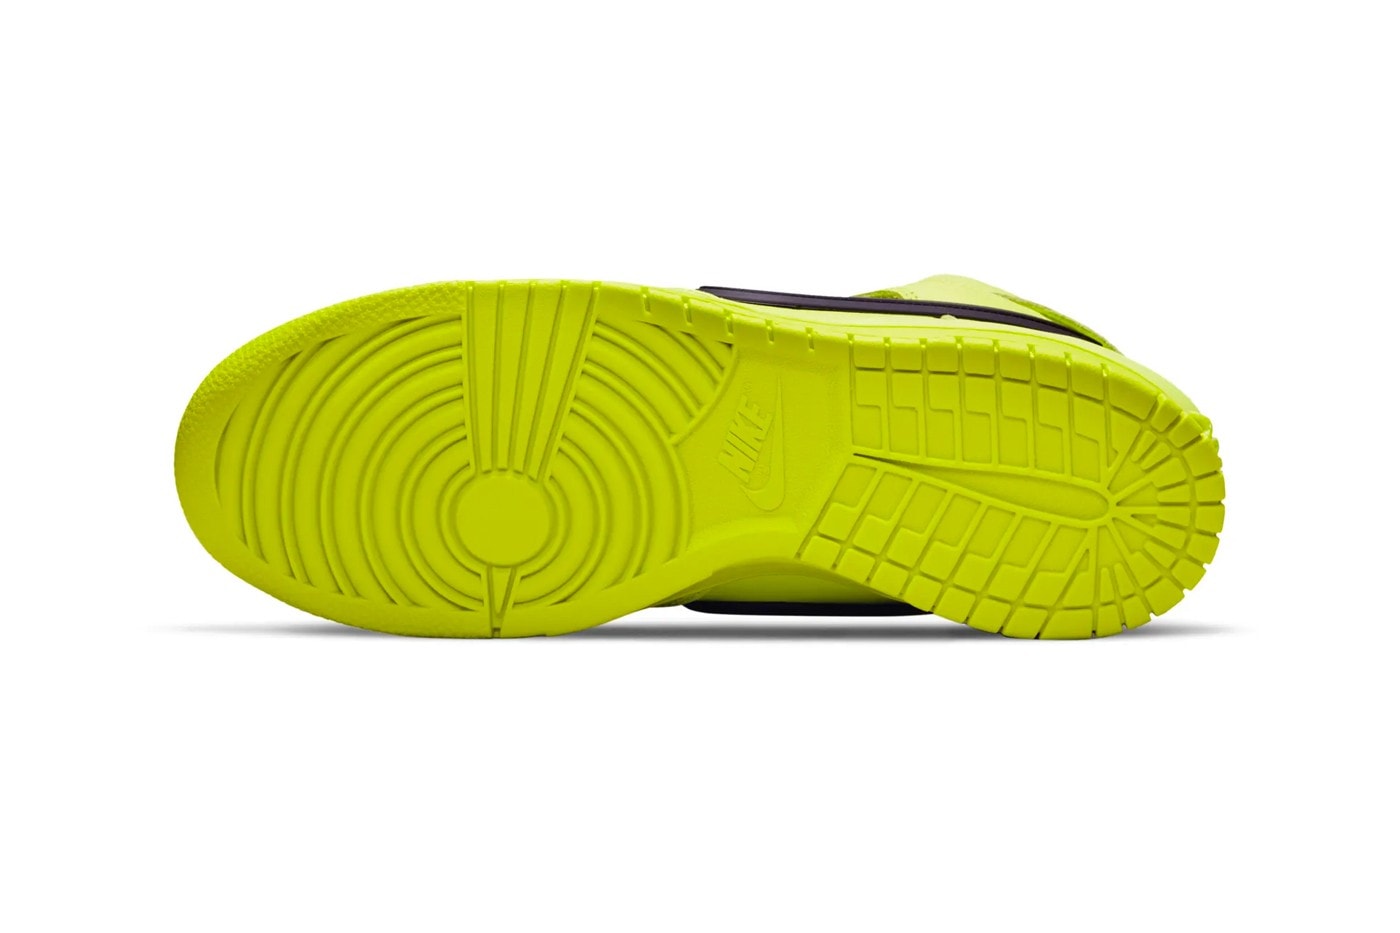 AMBUSH x Nike Dunk High 最新聯名配色「Flash Lime」正式登場